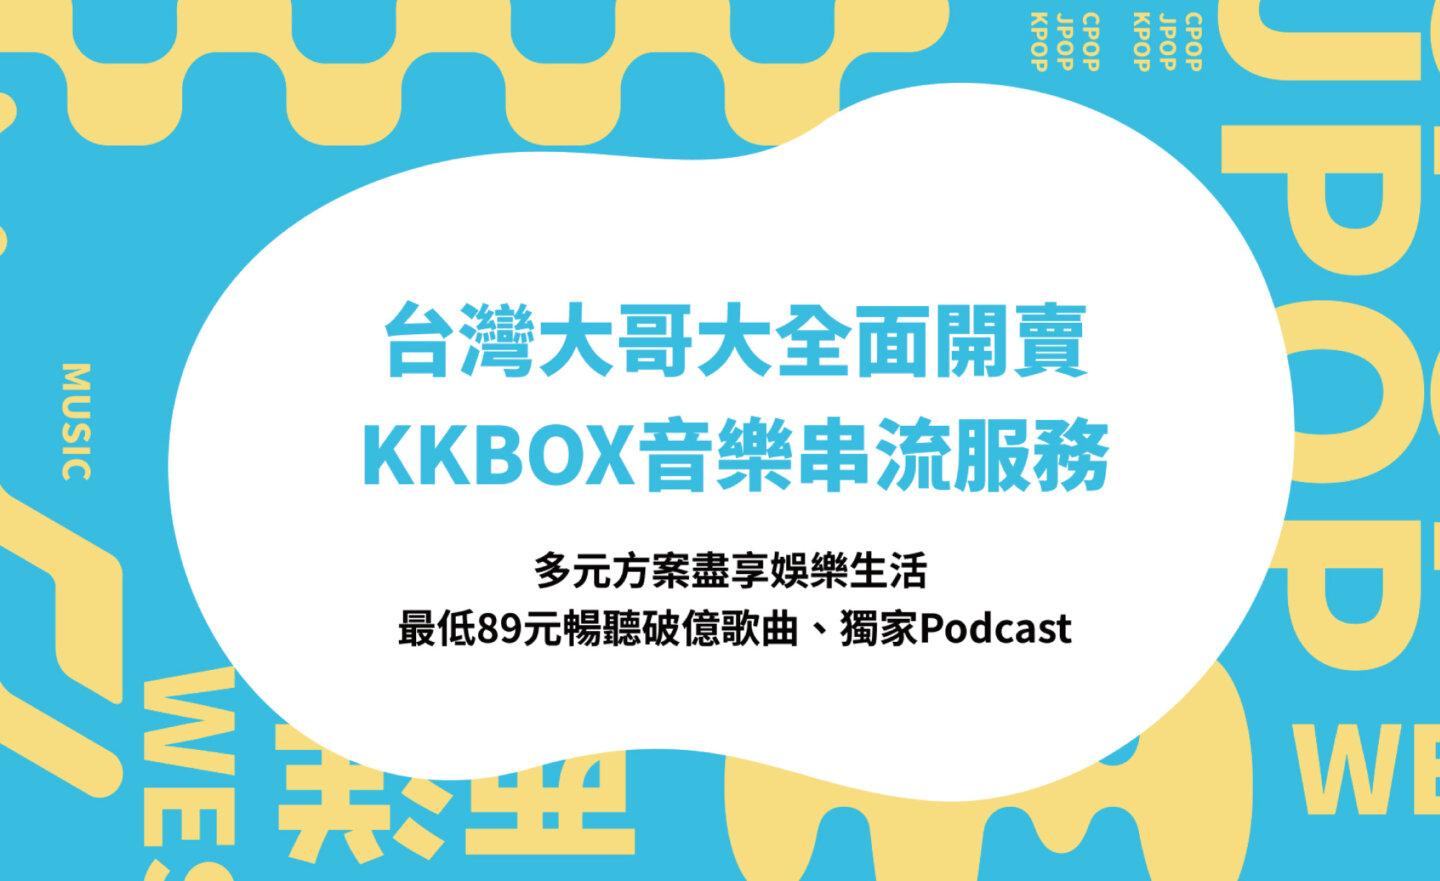 KKBOX 音樂串流服務在台灣大哥大推出